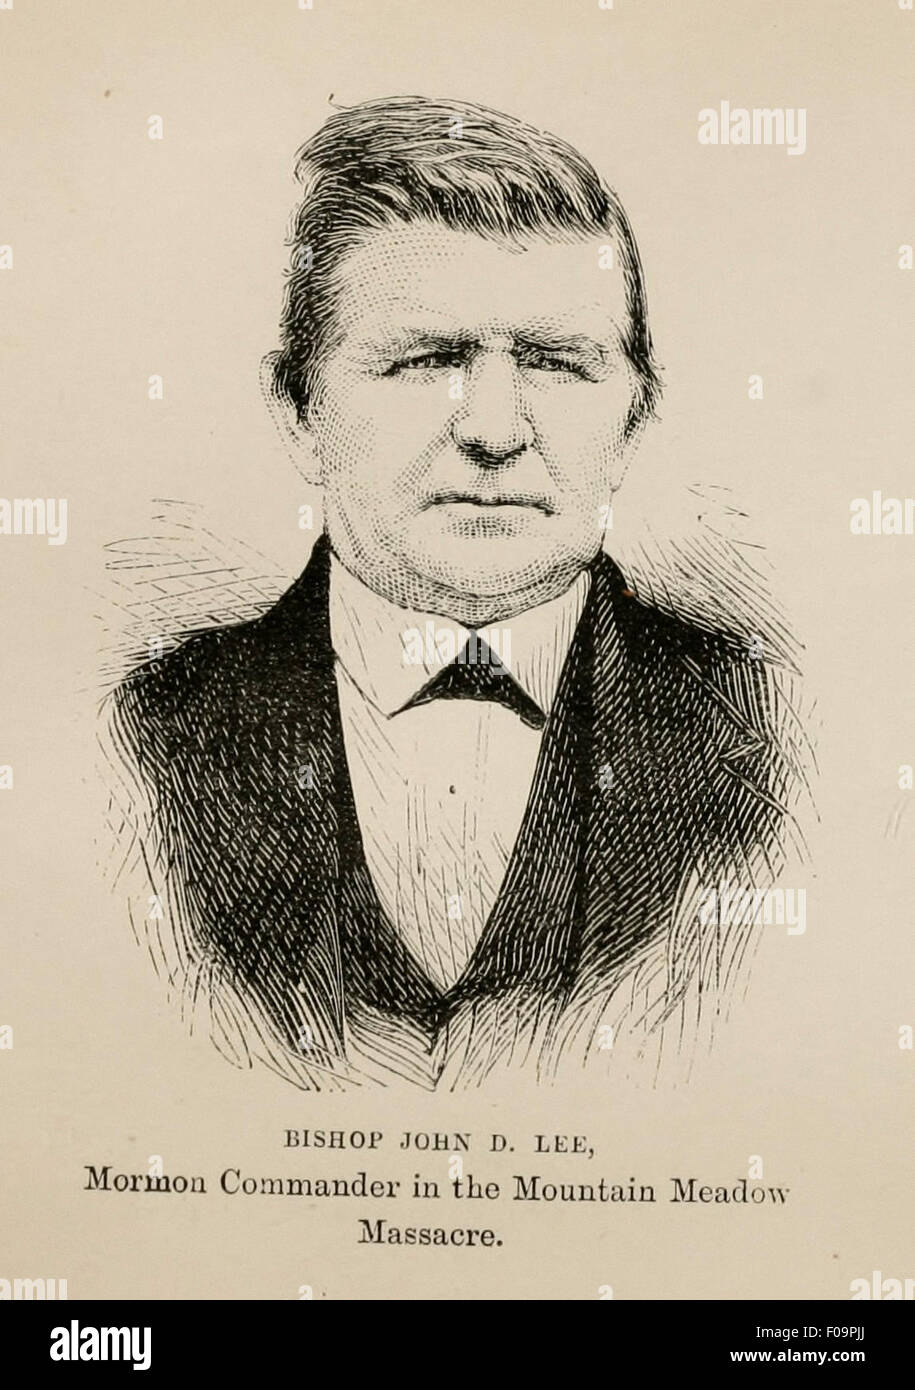 Bishop John D Lee - Mormon Commander in the Mountain Meadow Massacre, Utah, 1857 Stock Photo